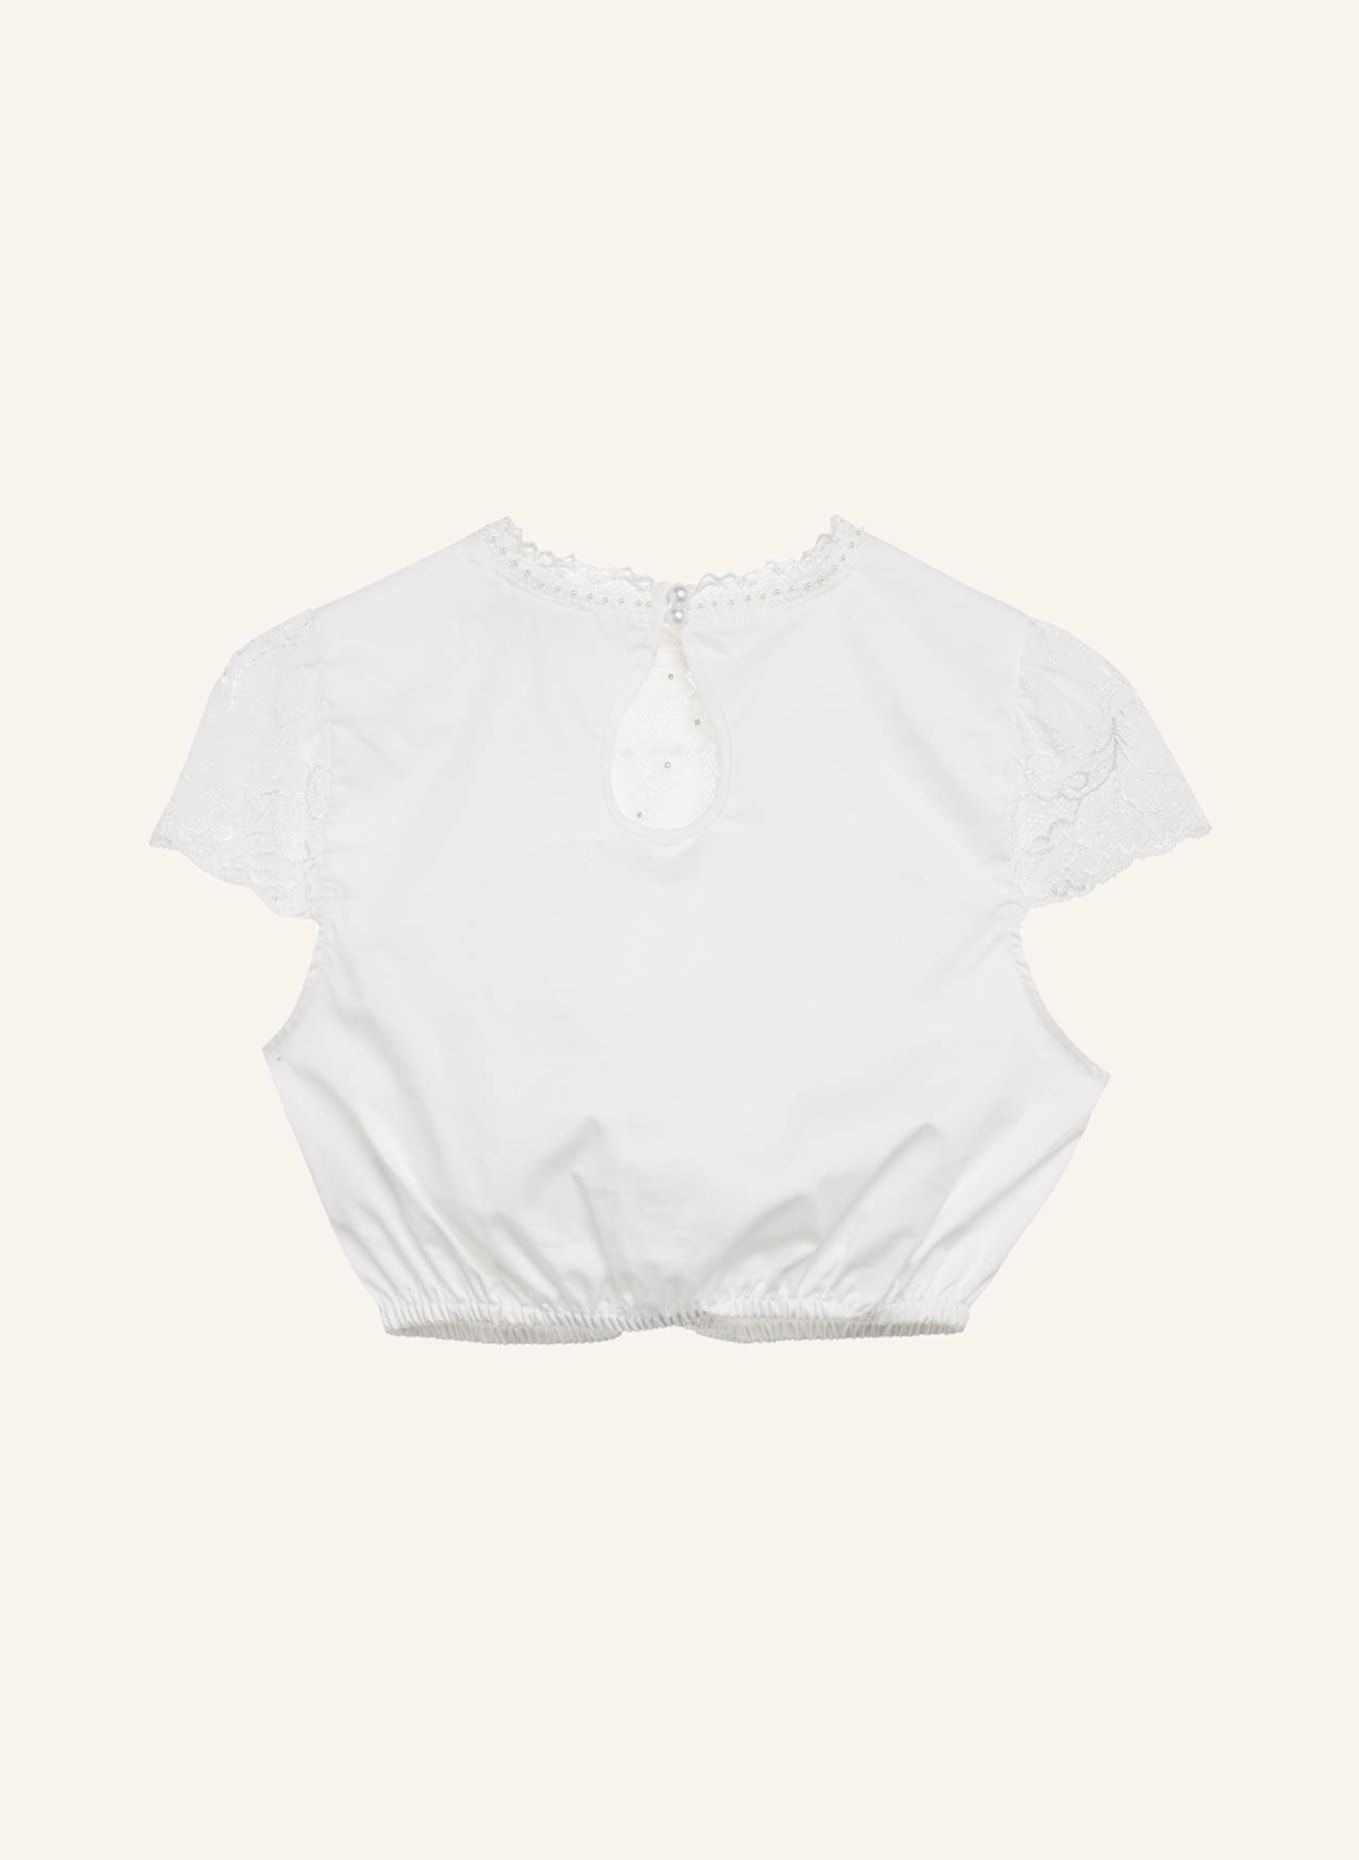 KRÜGER Dirndl blouse BERNA with bead trim, Color: WHITE (Image 2)